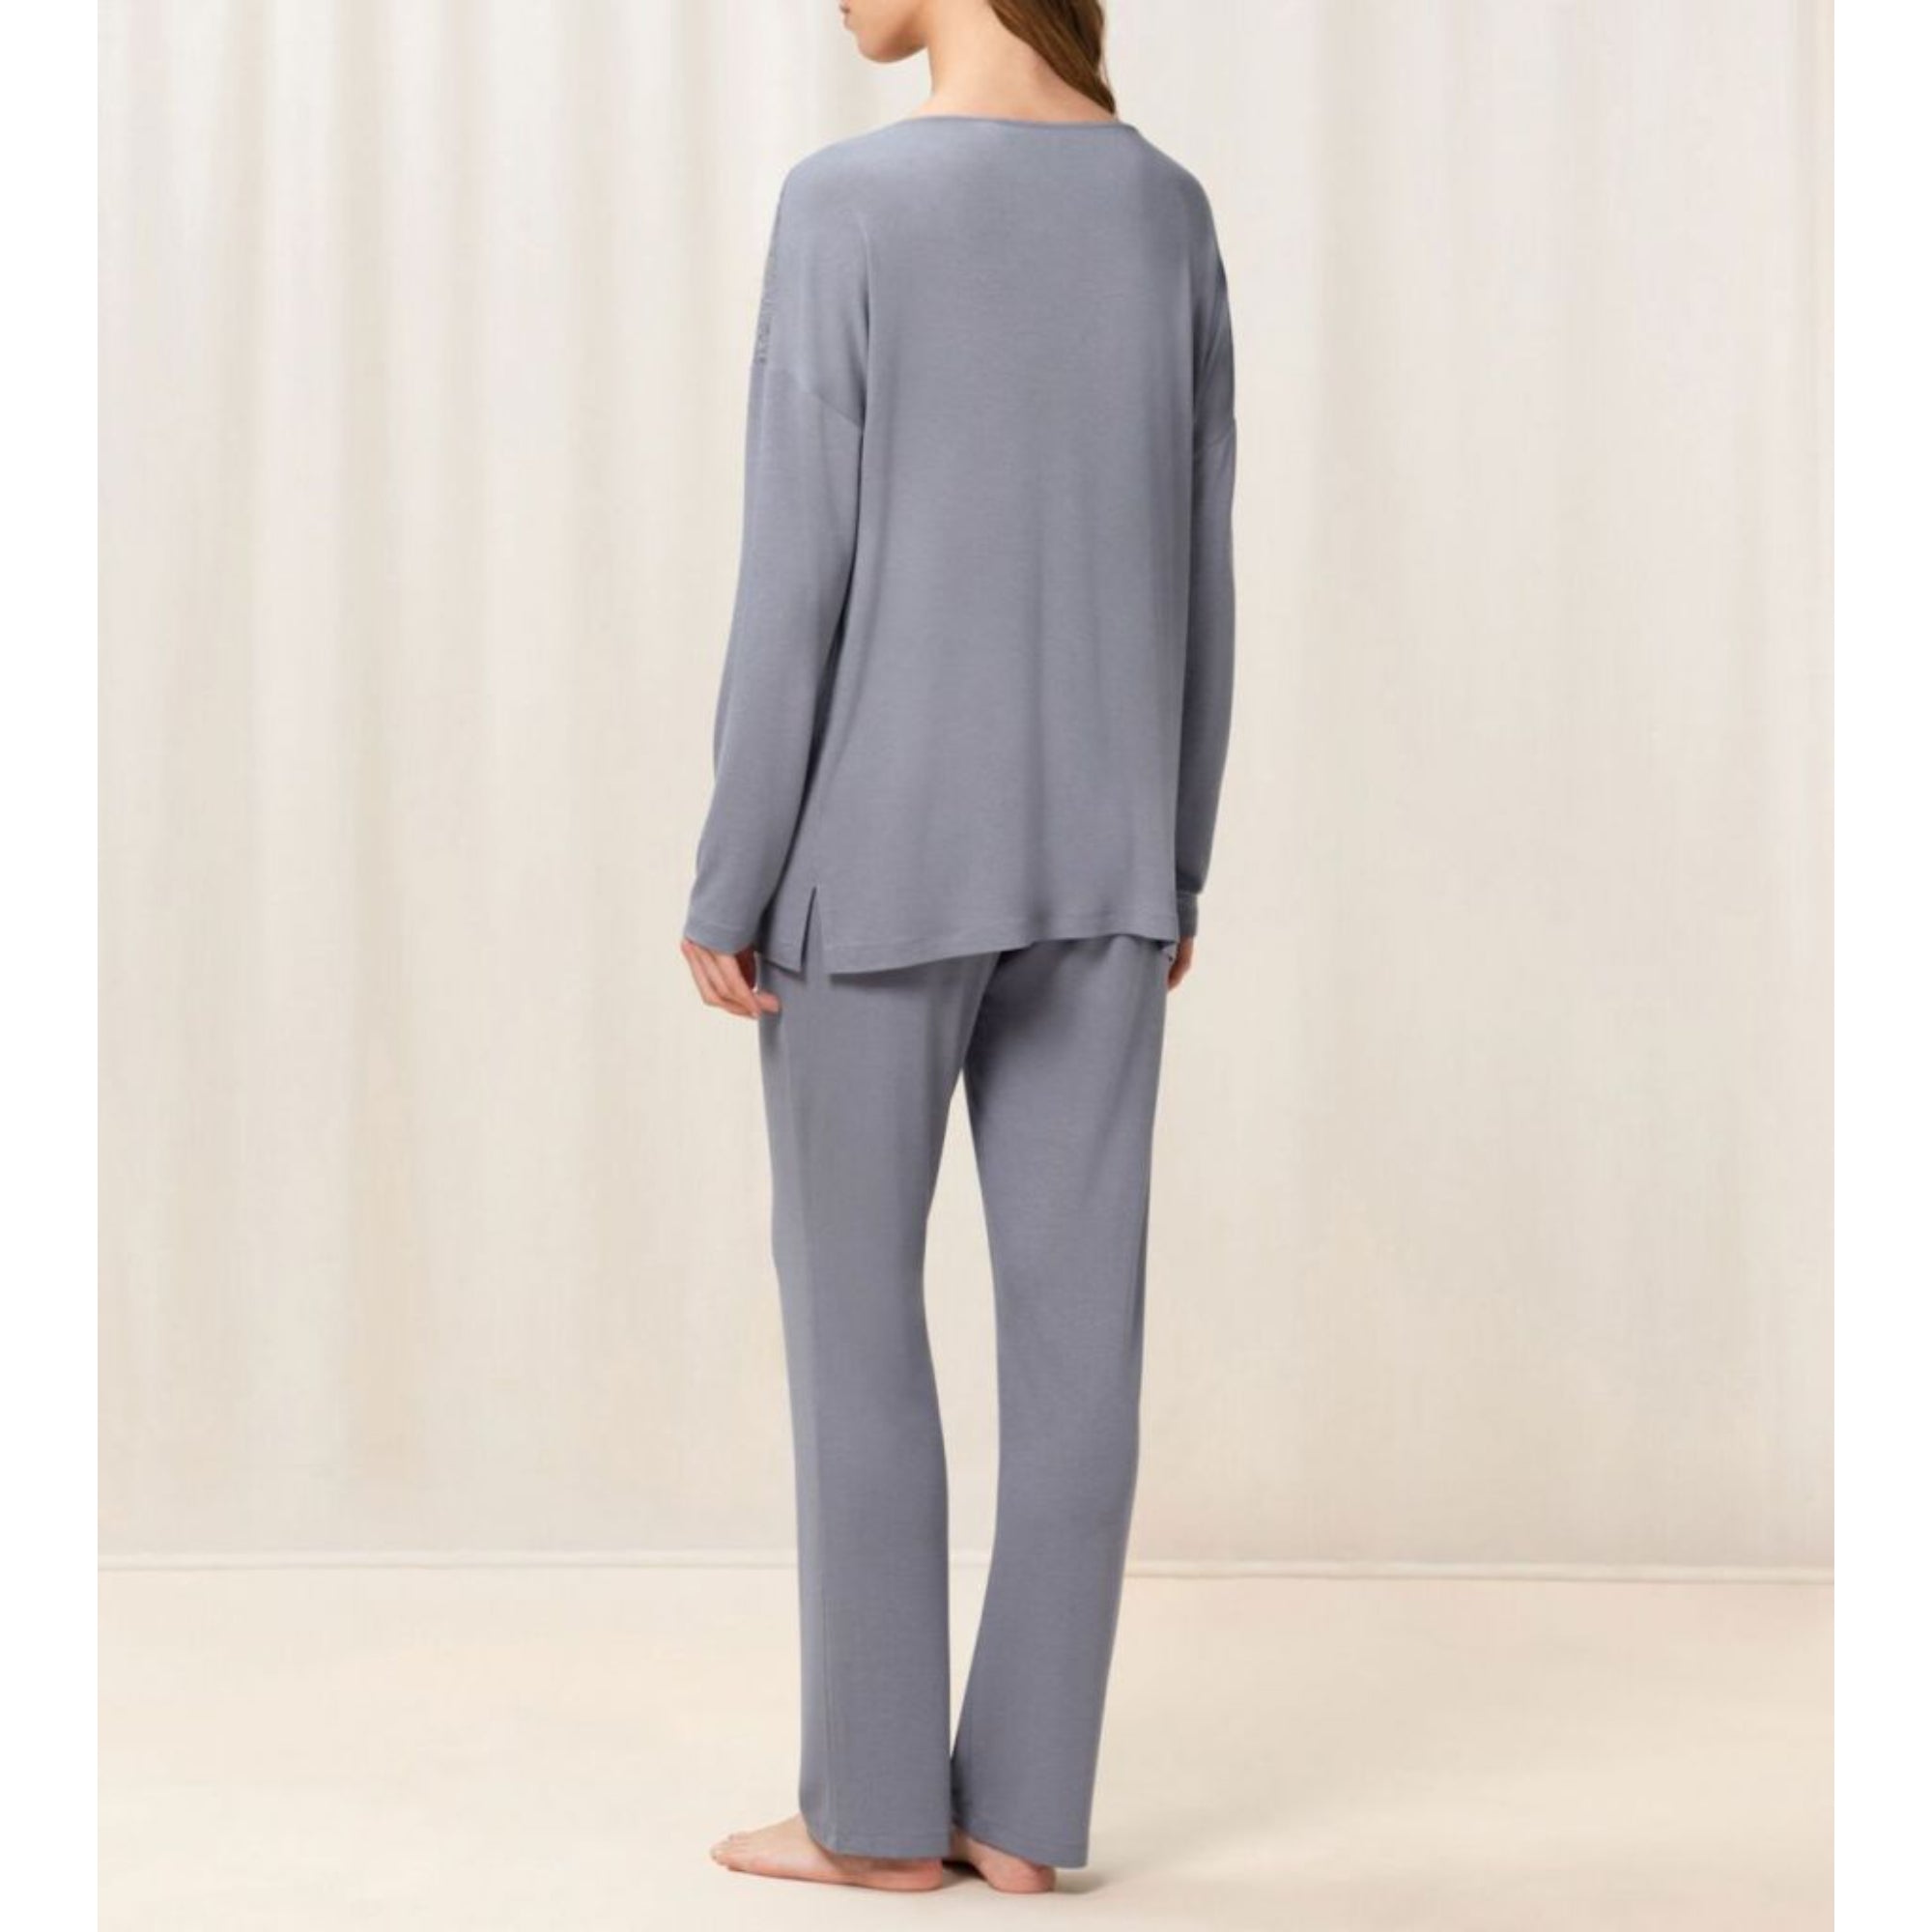 Triumph Amourette Pajama Set – For Girls